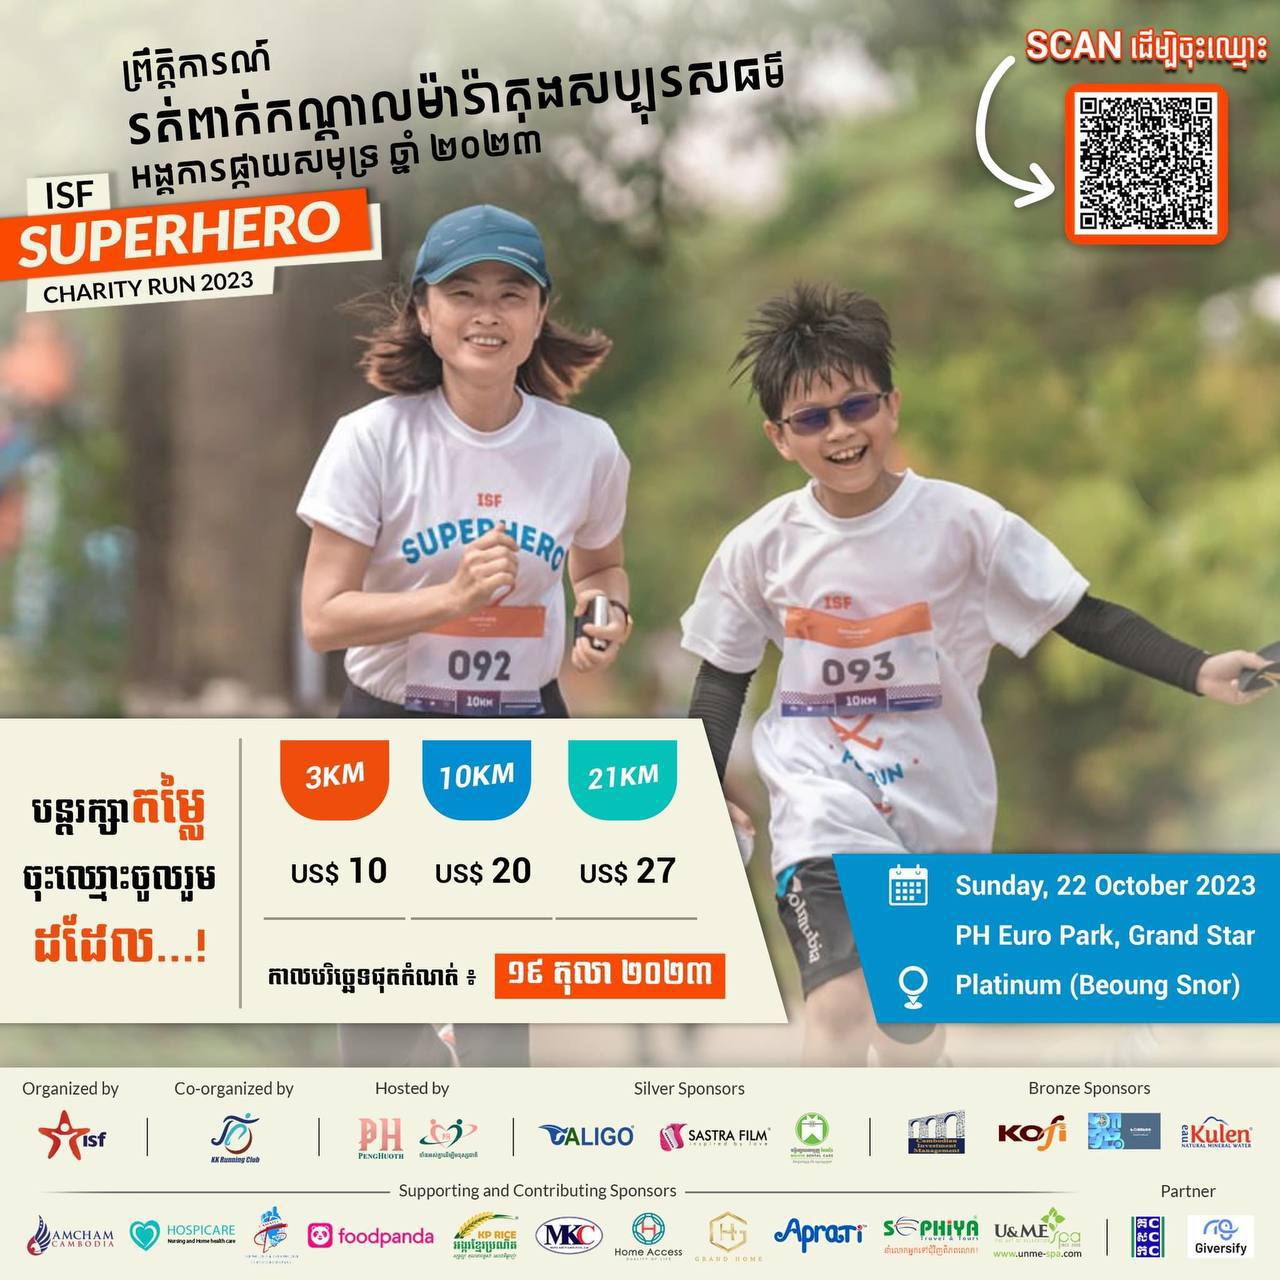 ISF Superhero Charity Run 2023